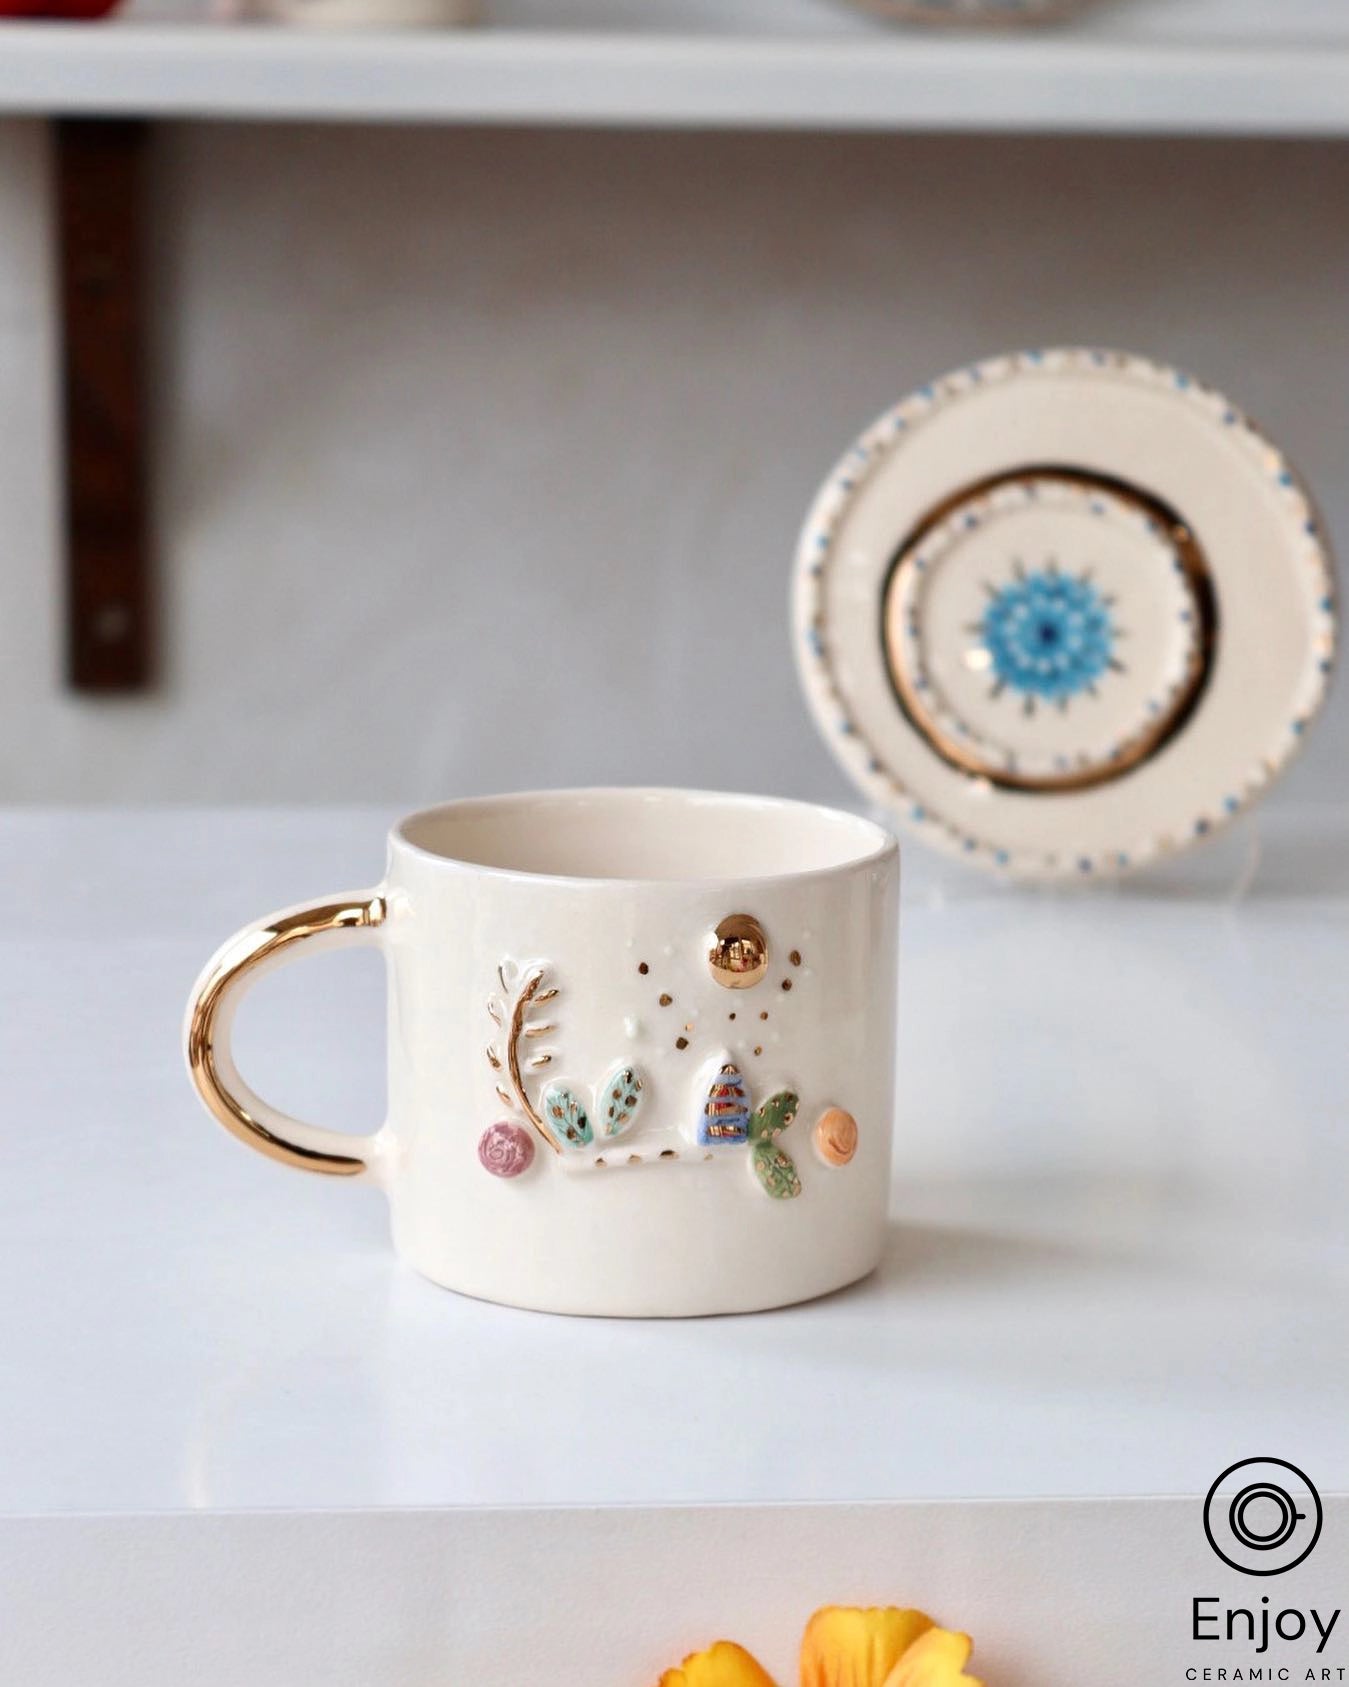 Handmade Coffee Coco Mug Beautiful Modern Design Rough Texture Two